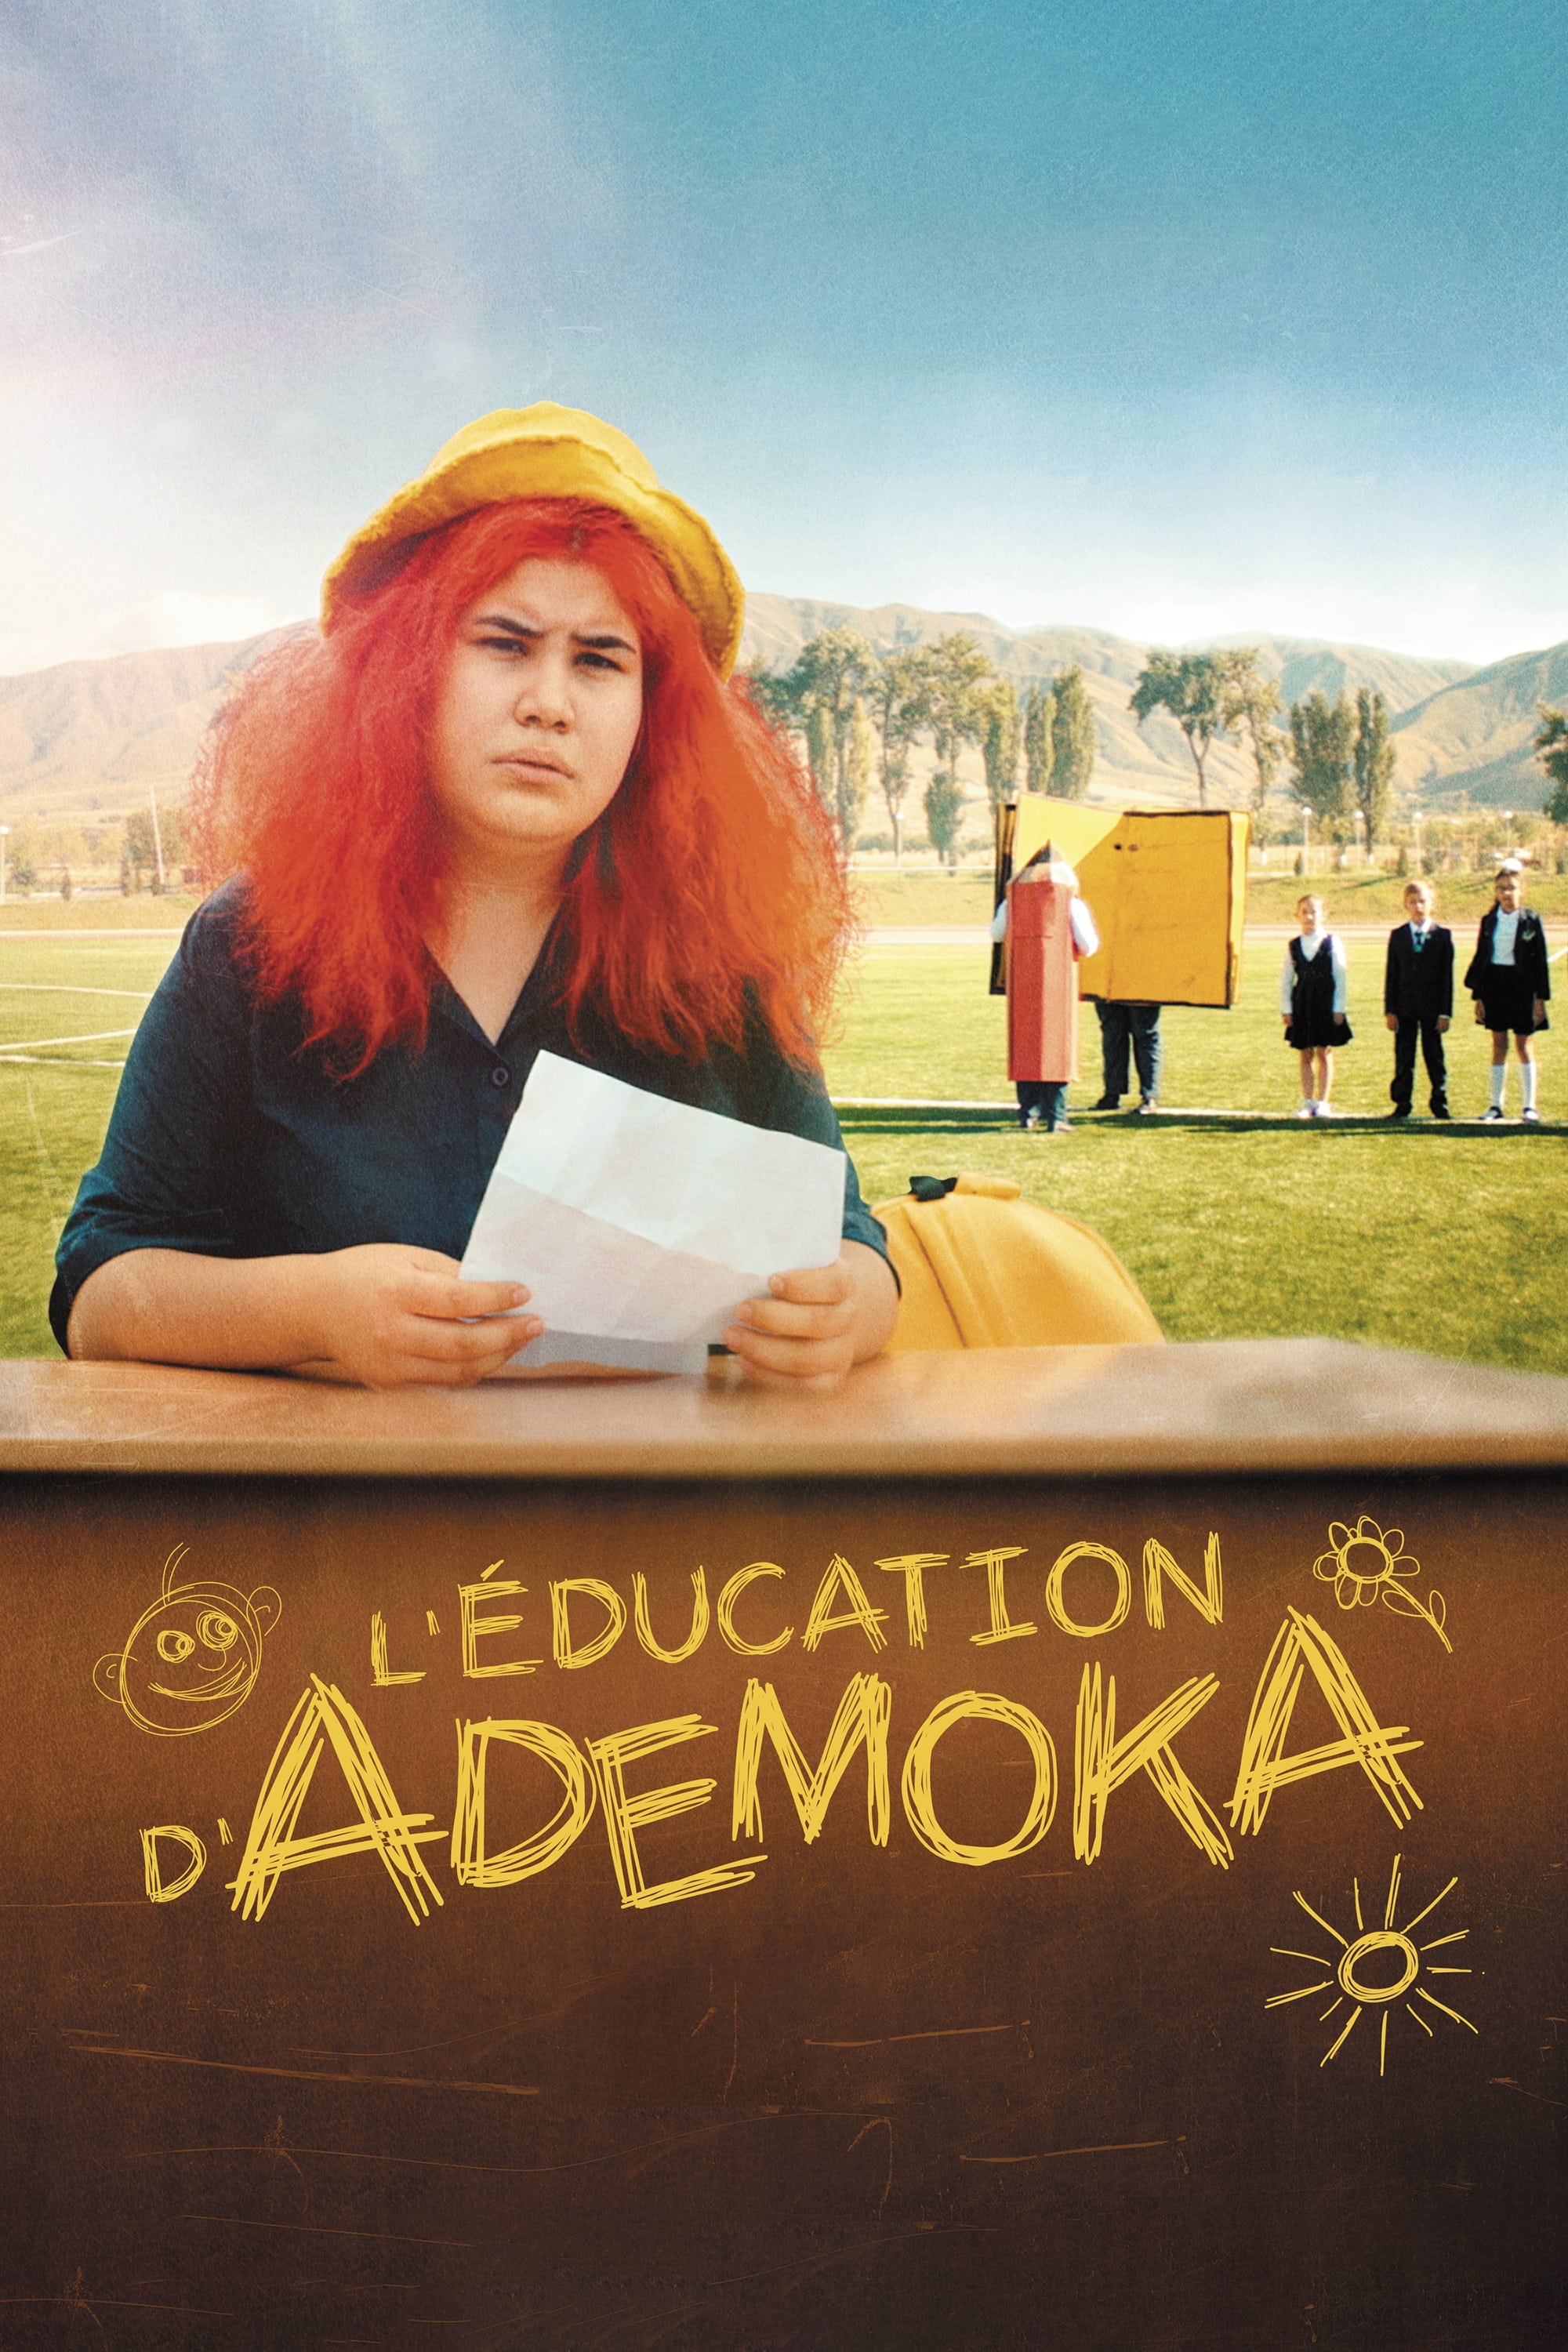 Ademoka’s Education